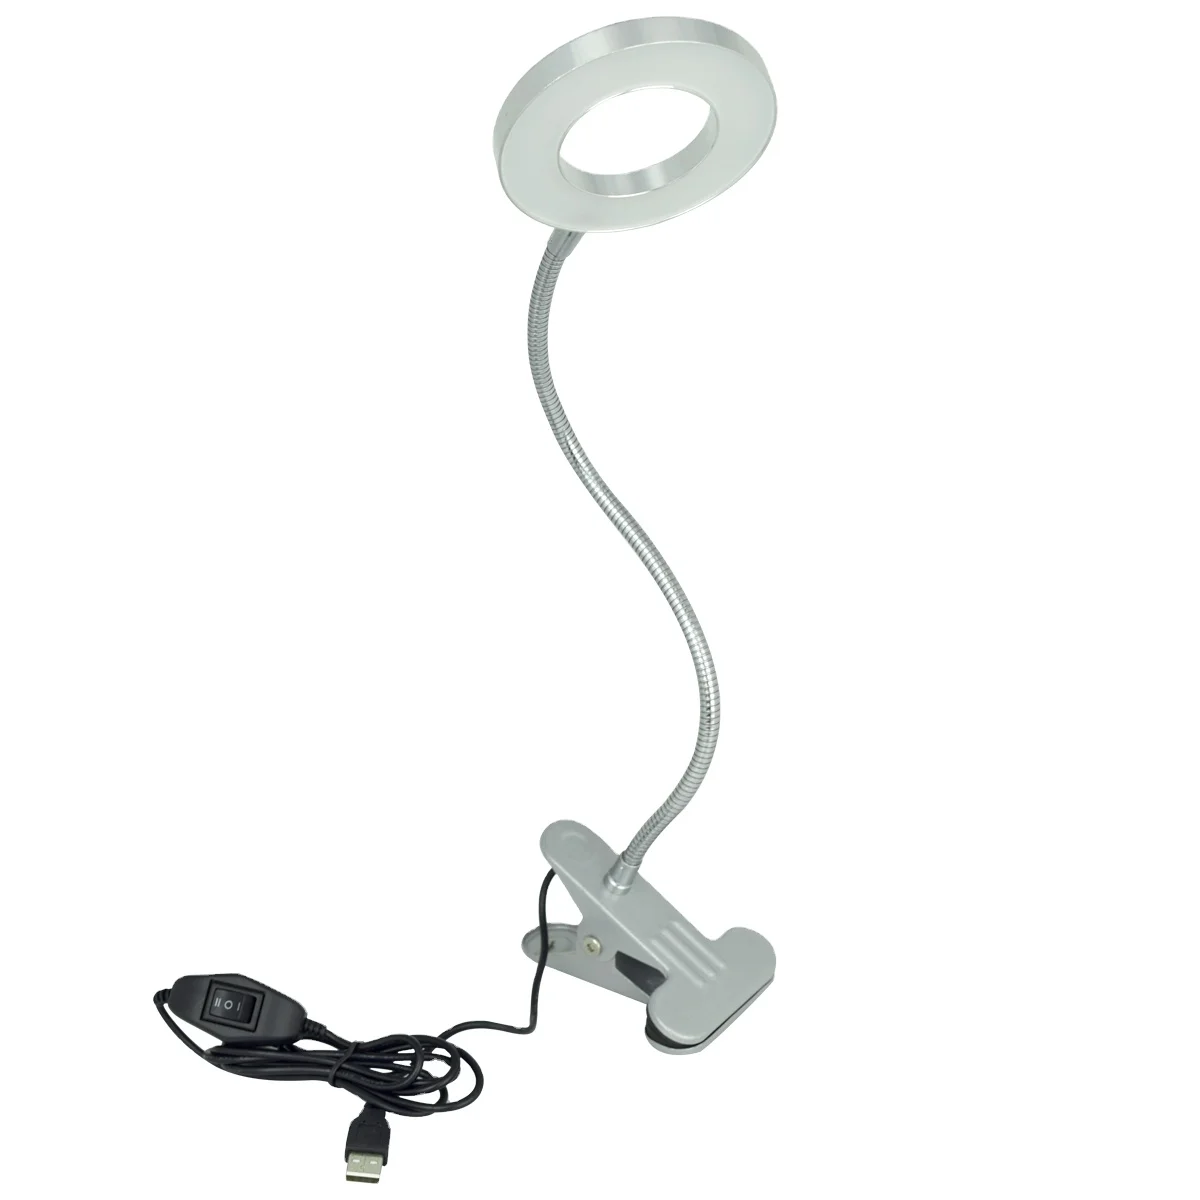 Depuley nice design flexible reading lamp bulb aluminium adjustable led clip table lamp portable desk light